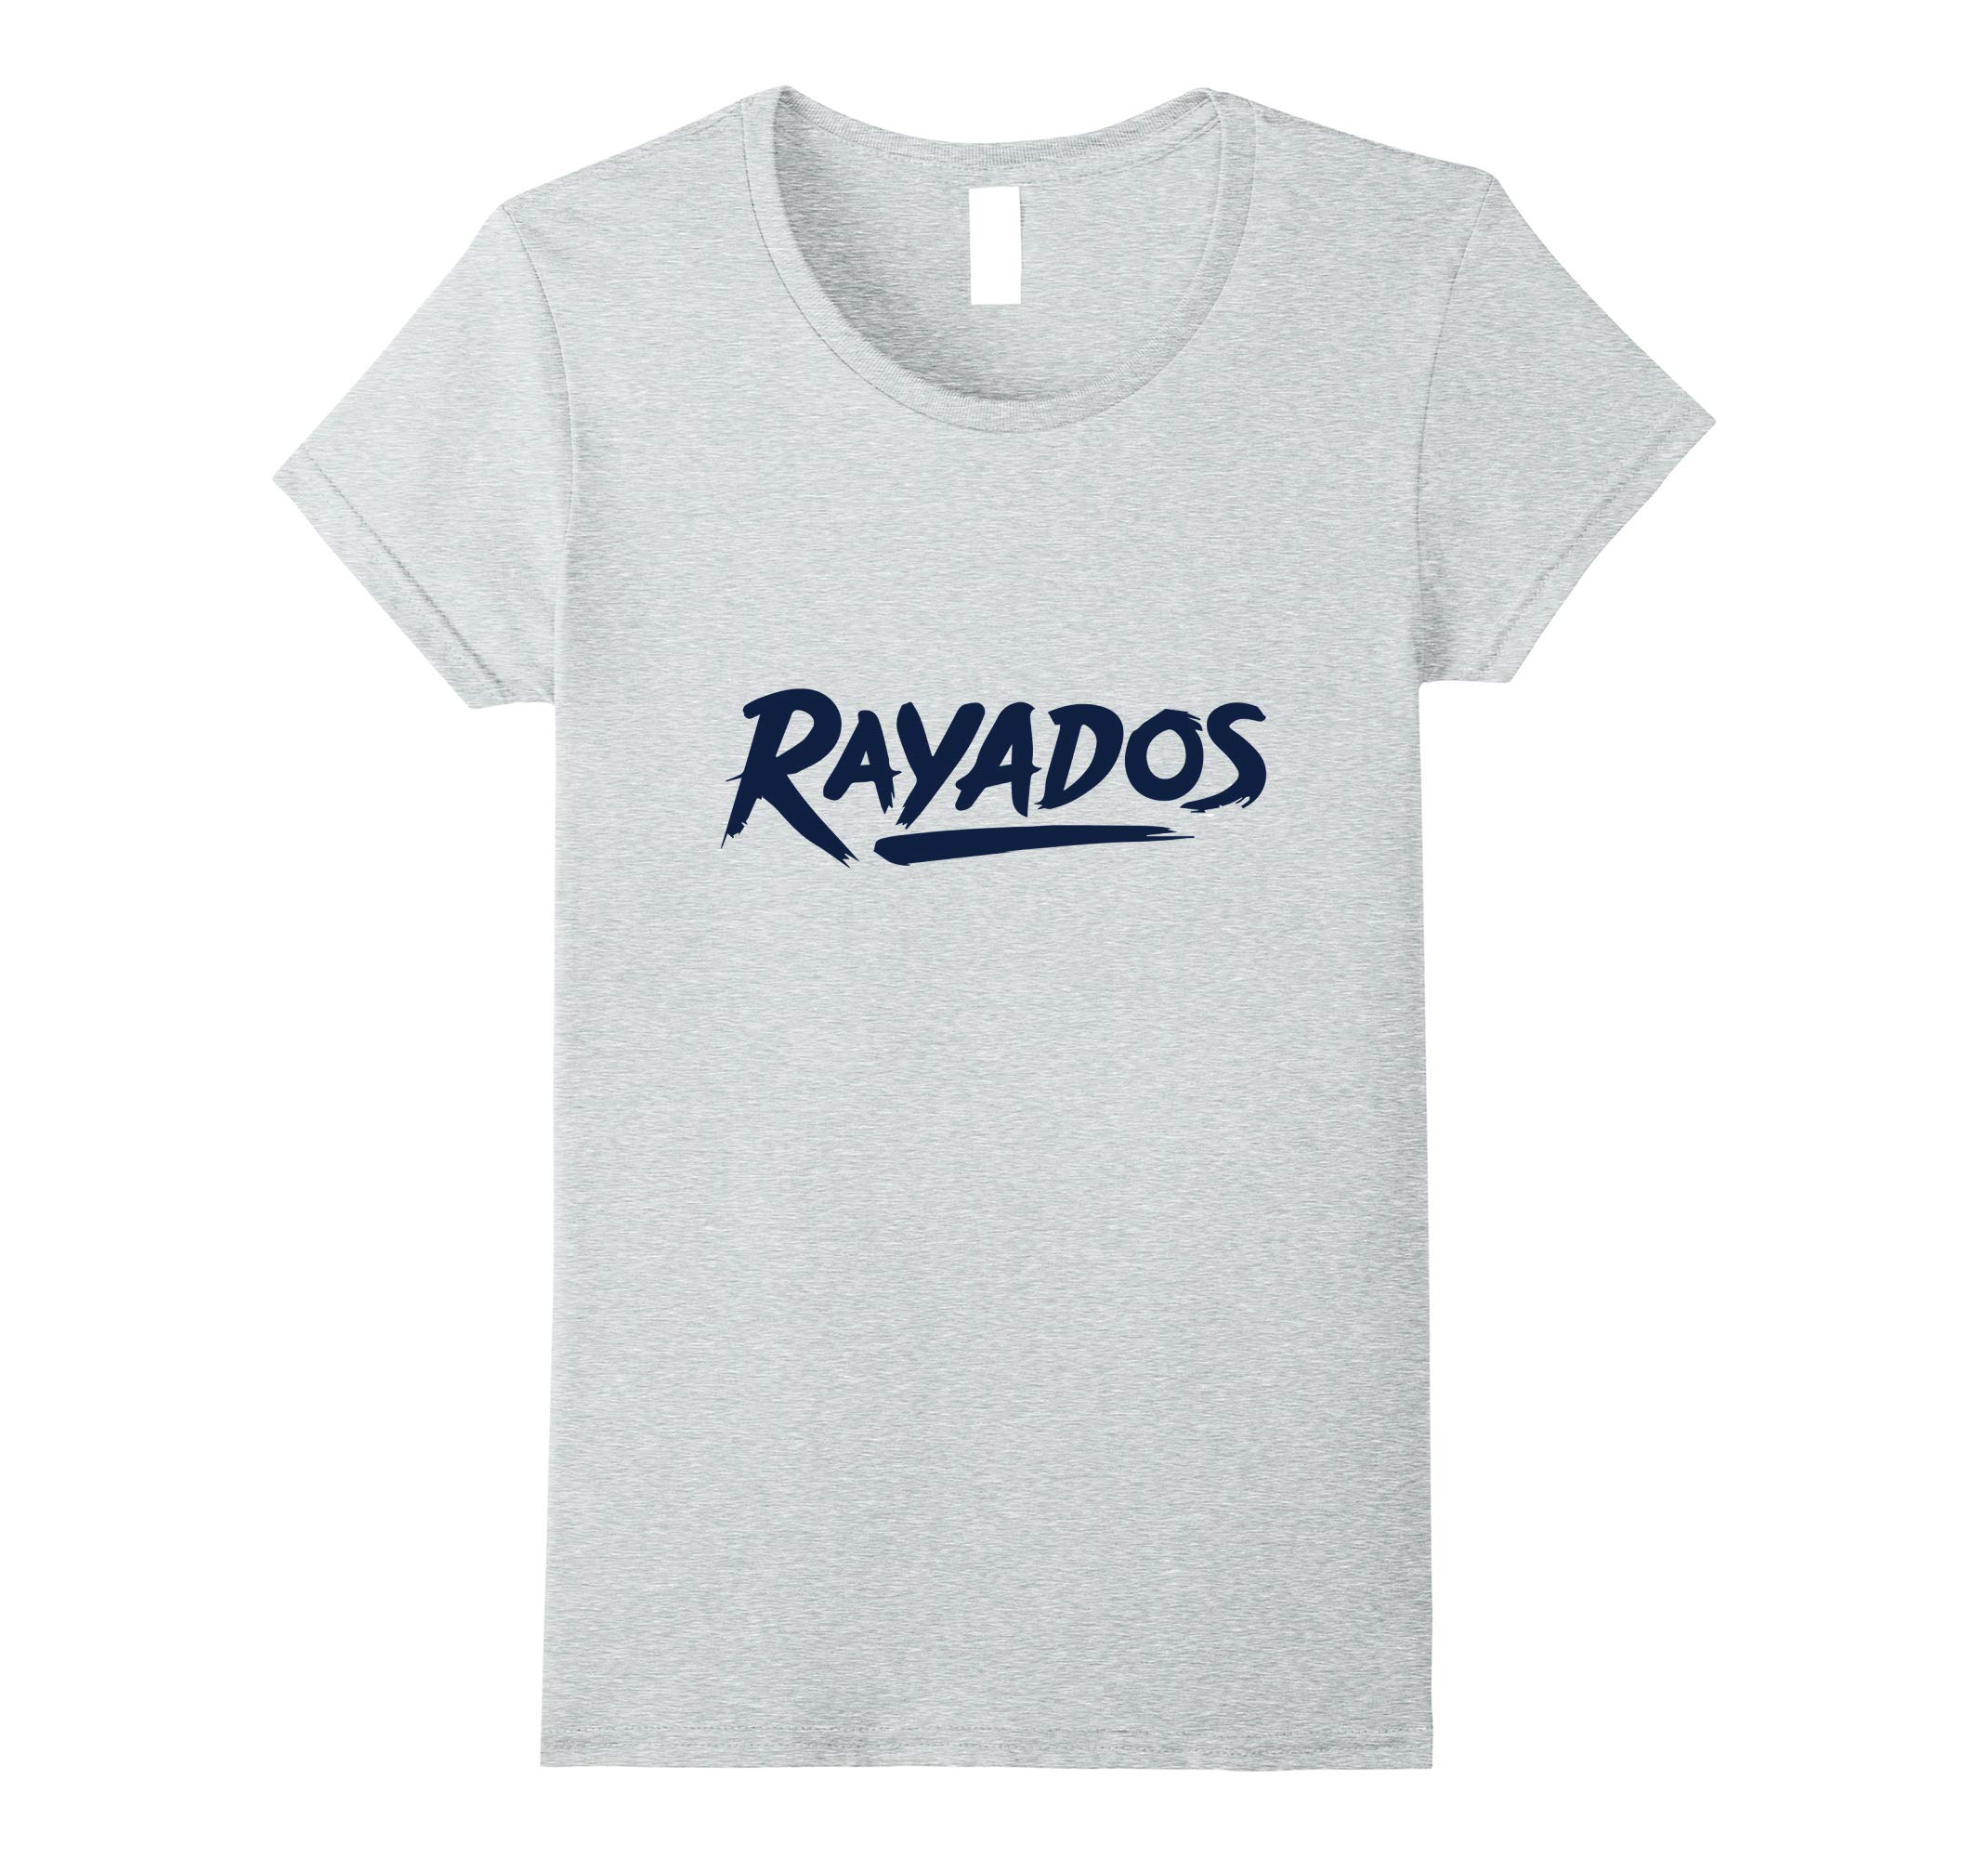 Amazon.com: Rayados de MTY Equipo Camisa T Shirt Playera.